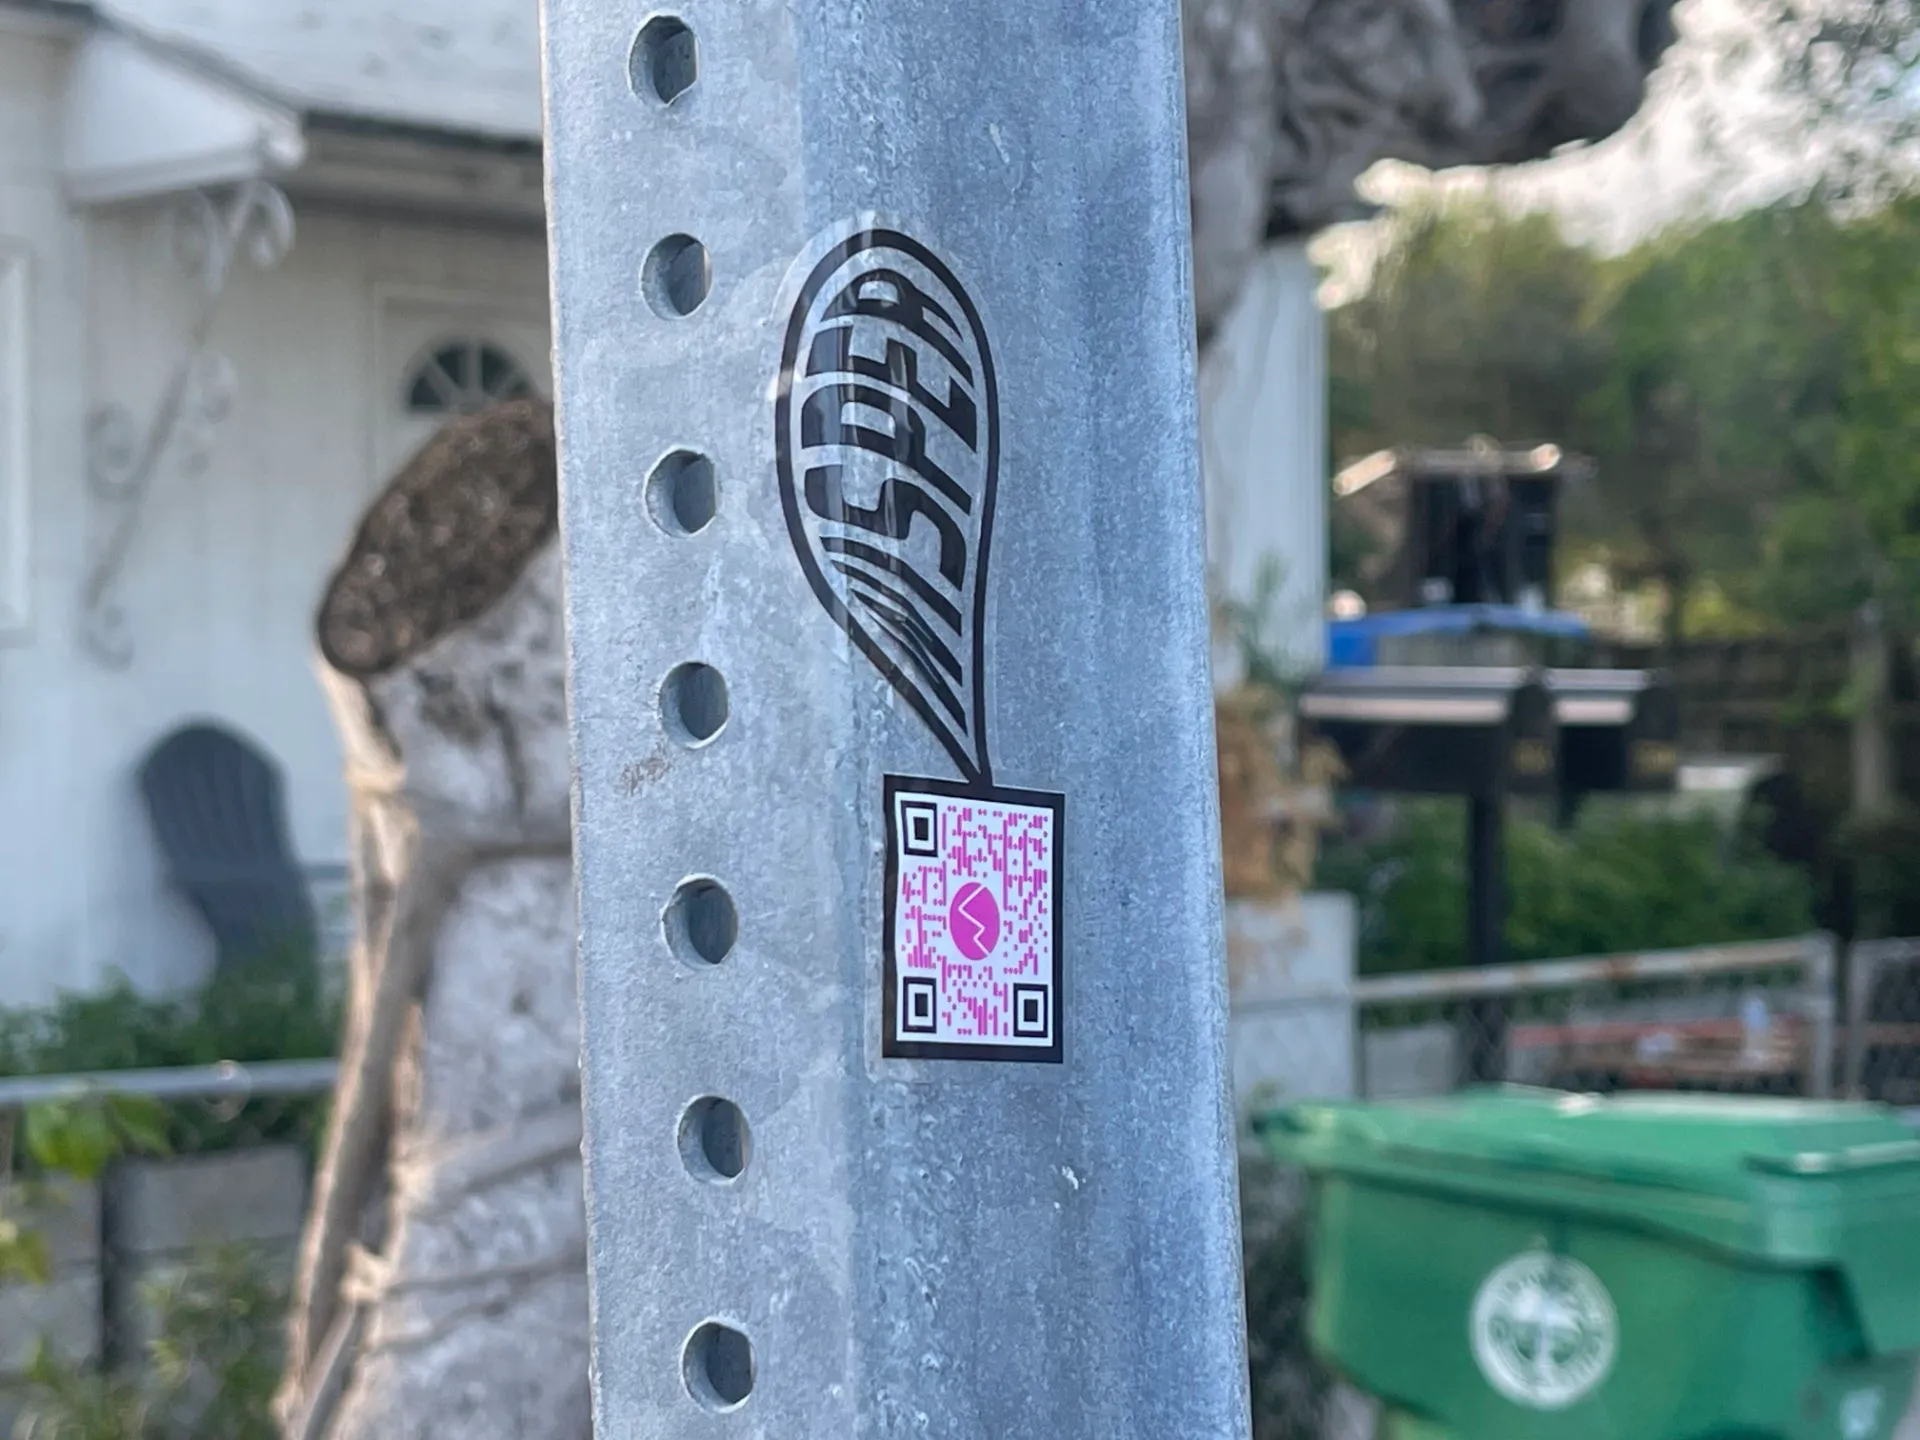 Wisper sticket on a metal bar